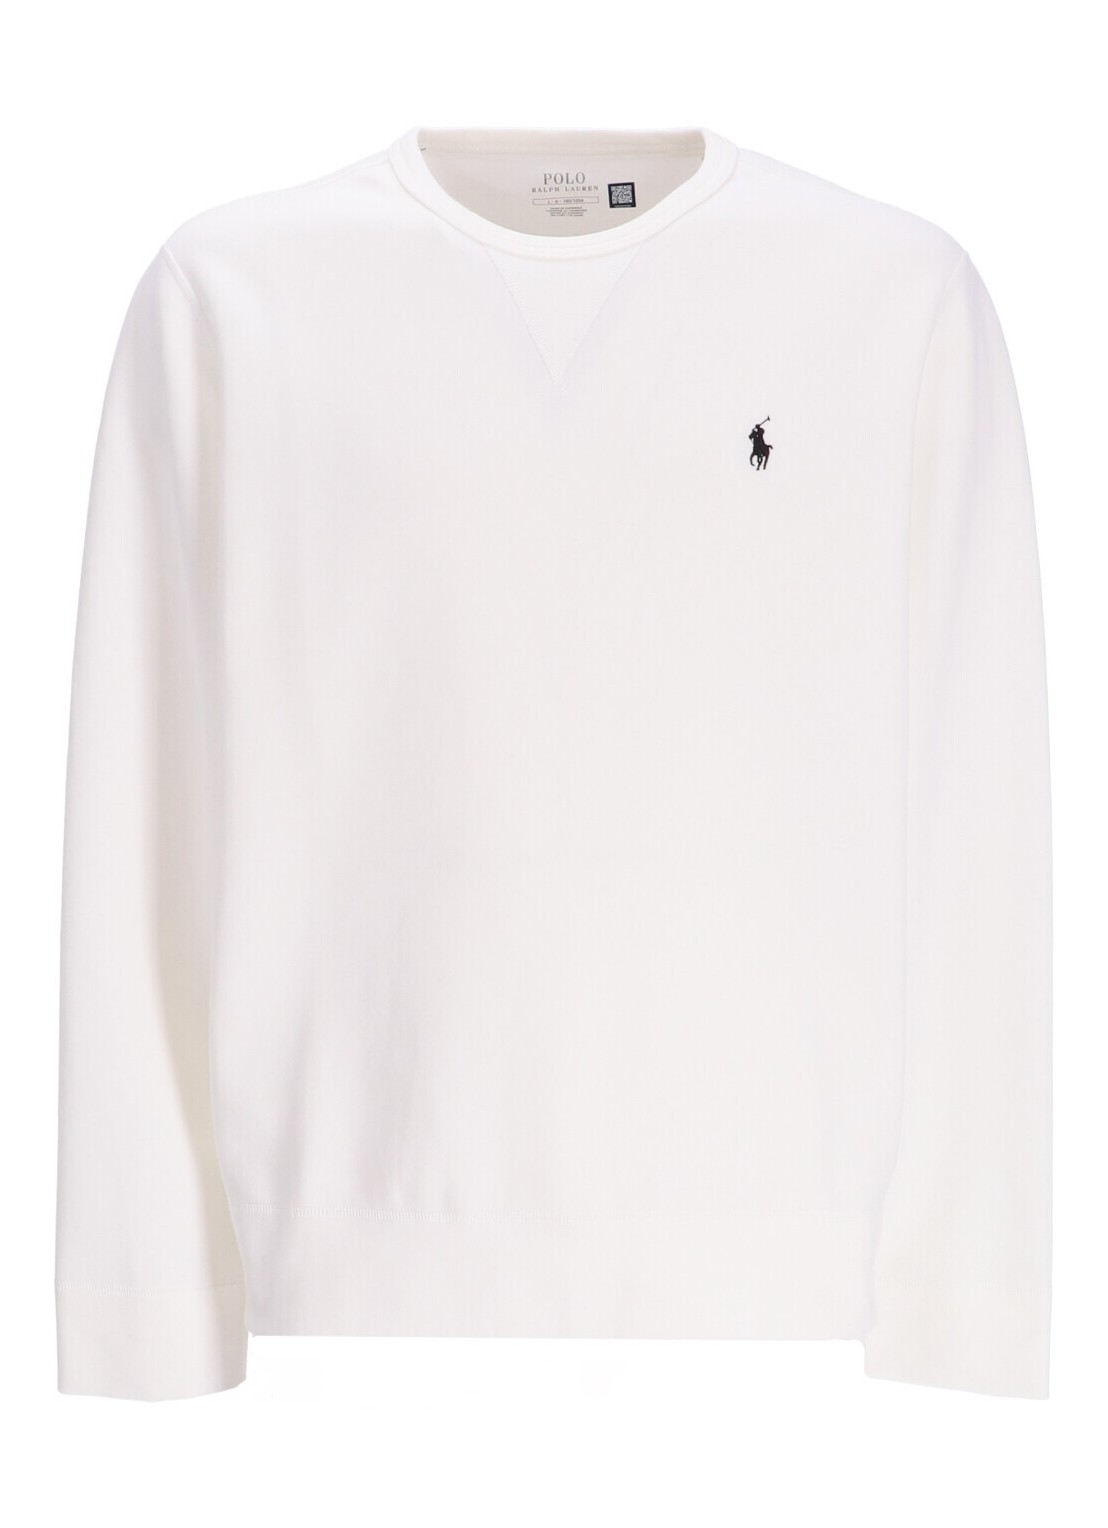 Sudadera polo ralph lauren sweater man lscnm6-long sleeve-sweatshirt 710881519006 white talla blanco